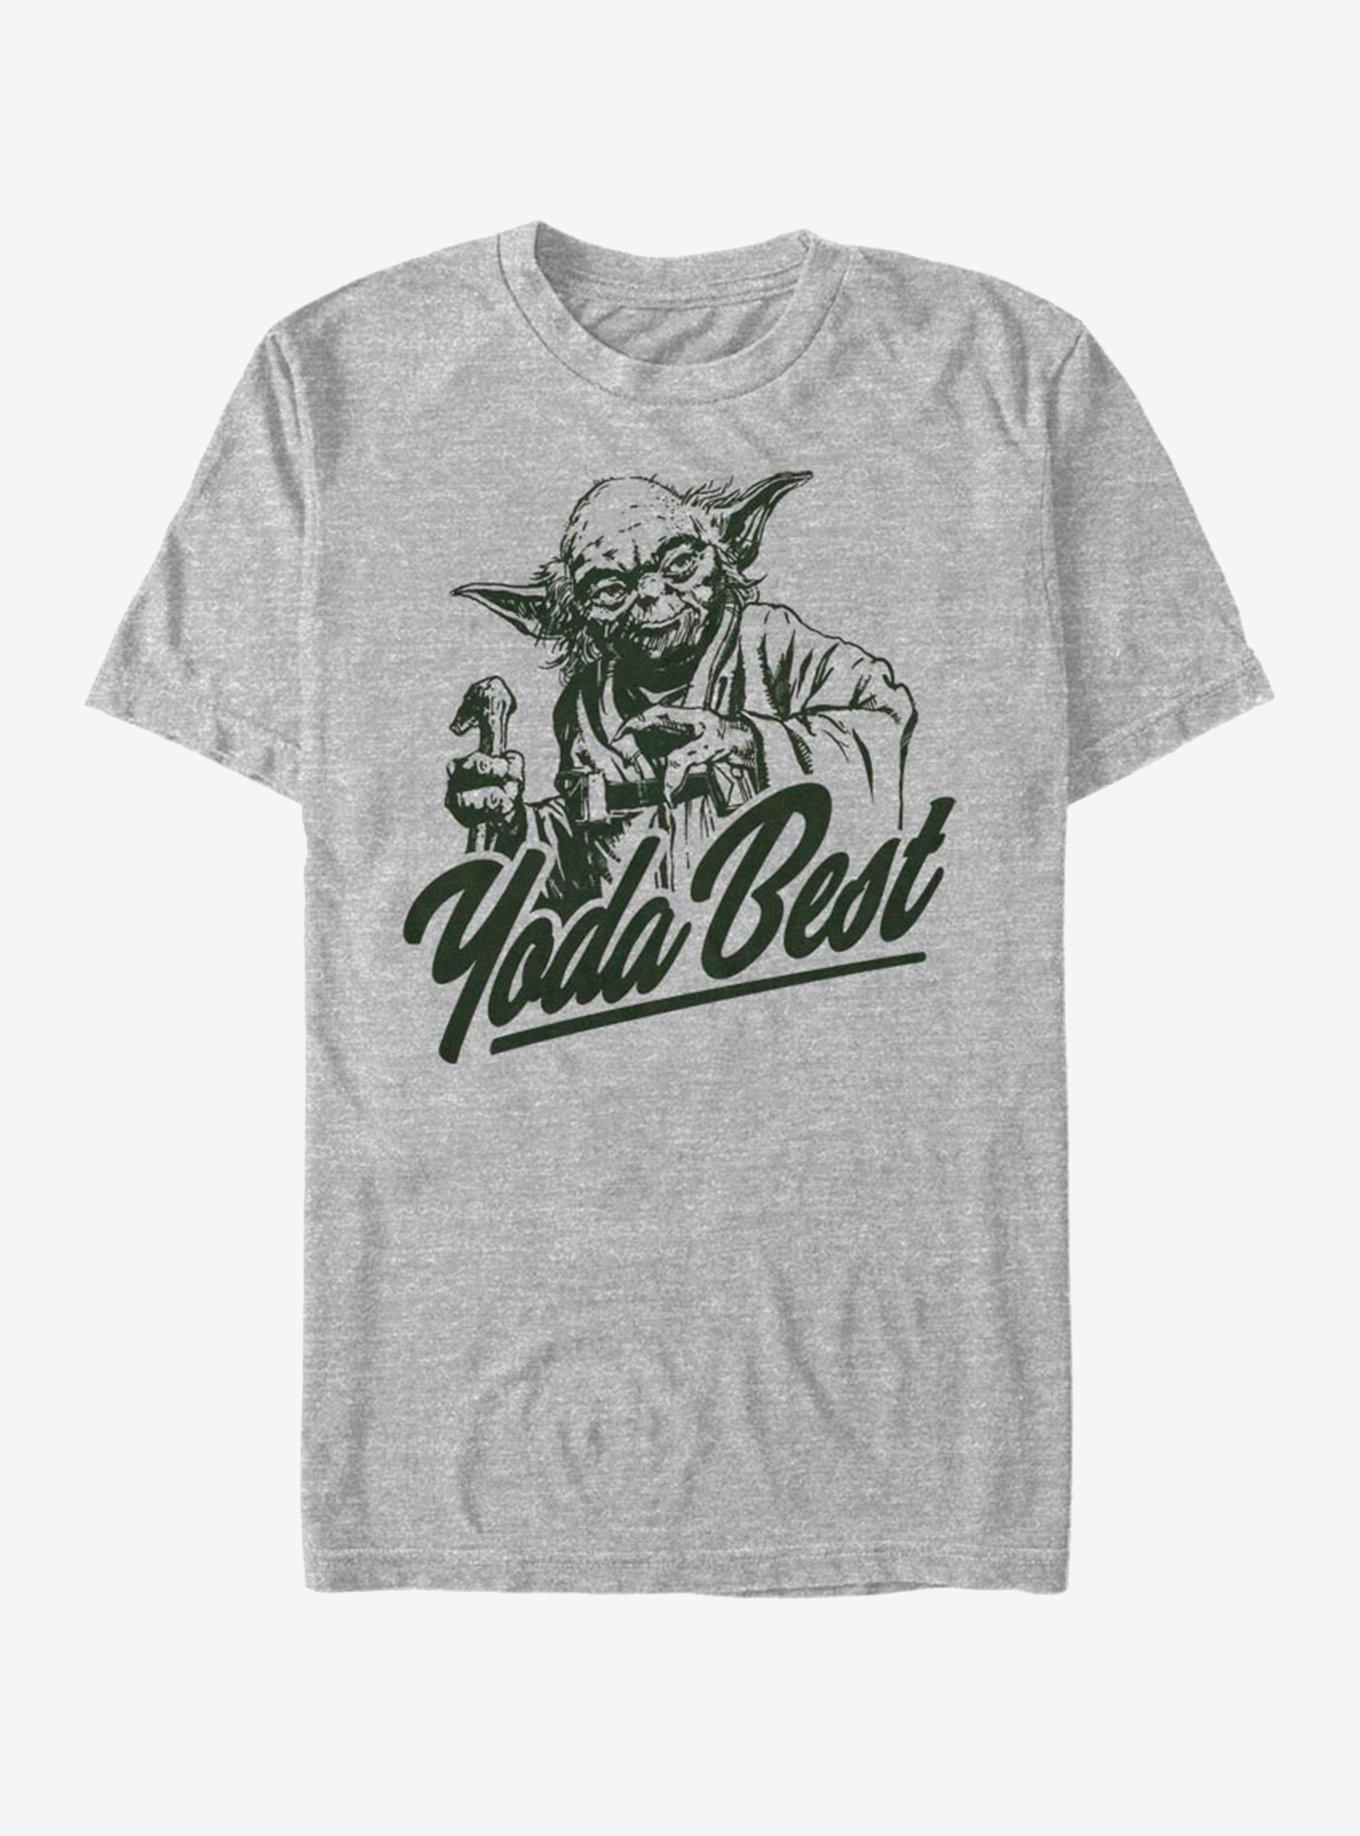 Star Wars Best Yoda T-Shirt